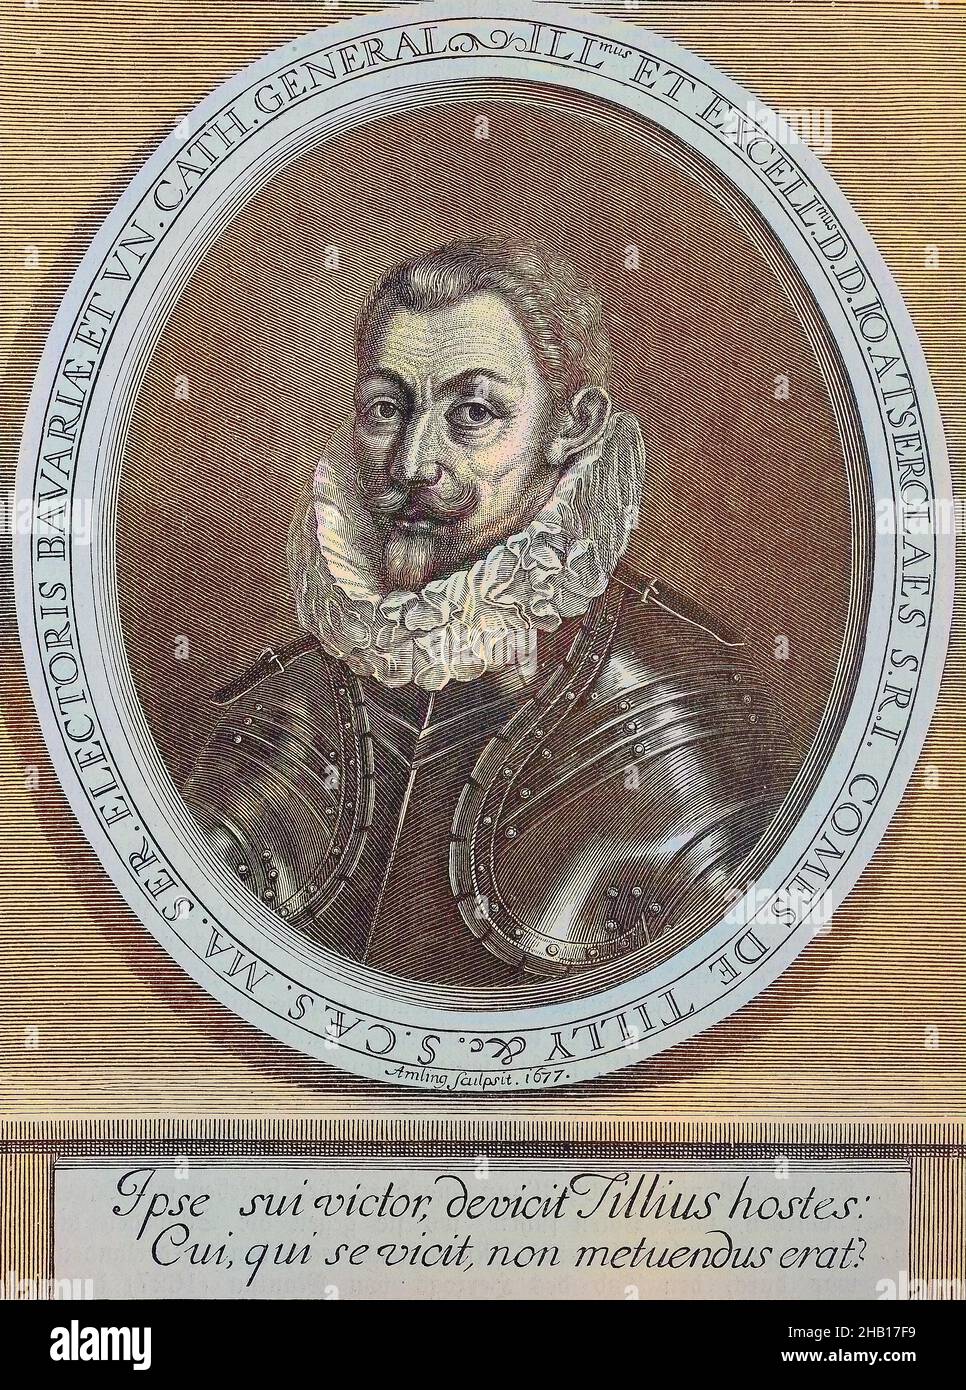 Johann, John o Jean T'Serclaes di Tilly, dal 1559 febbraio al 30 aprile 1632, fu un conte olandese che servì durante la Guerra dei Trent'anni come comandante supremo sia della Lega Cattolica che dal 1630 dell'esercito imperiale, incisa da Umling After One Portrait, 1677 / Johann, John oder Jean T'Serclaes von Tilly, febbraio 1559 - 30. Aprile 1632, war ein Niederländischer Graf, der während des Dreißigjährigen Krieges als Oberbefehlshaber sowohl der Katholischen Liga als auch ab 1630 der kaiserlichen Armee diente, Stich von Umling nach einem Porträt, 1677, riproduzione storica, digitale migliorata di An Foto Stock